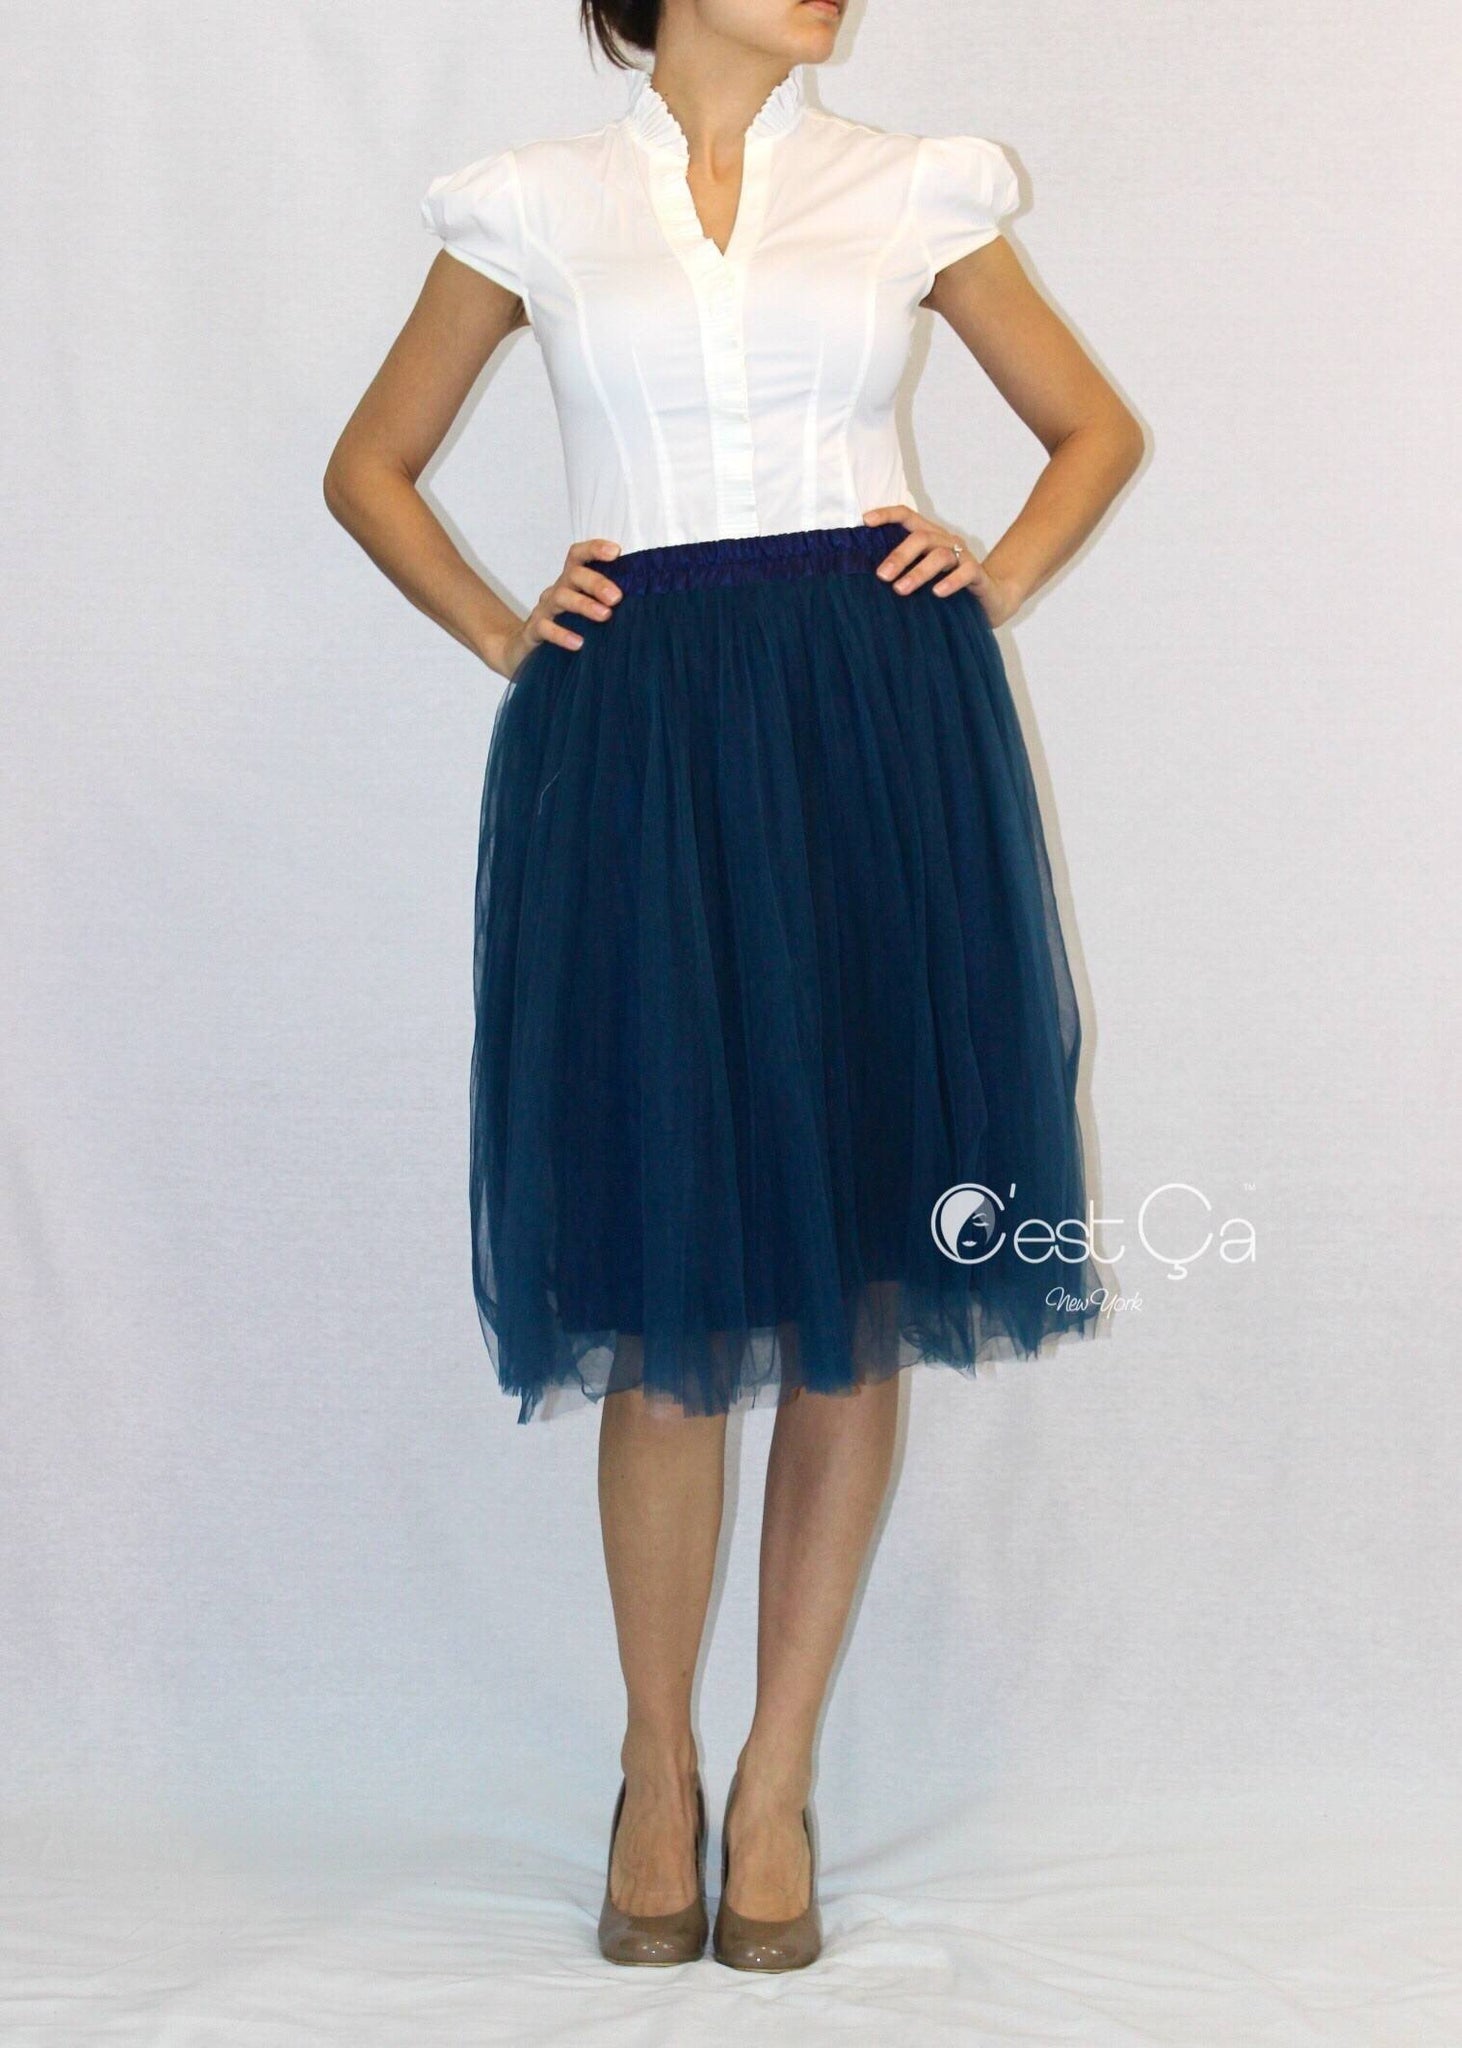 Claire Navy Blue Soft Tulle Skirt - Below Knee Midi – C'est Ça New York